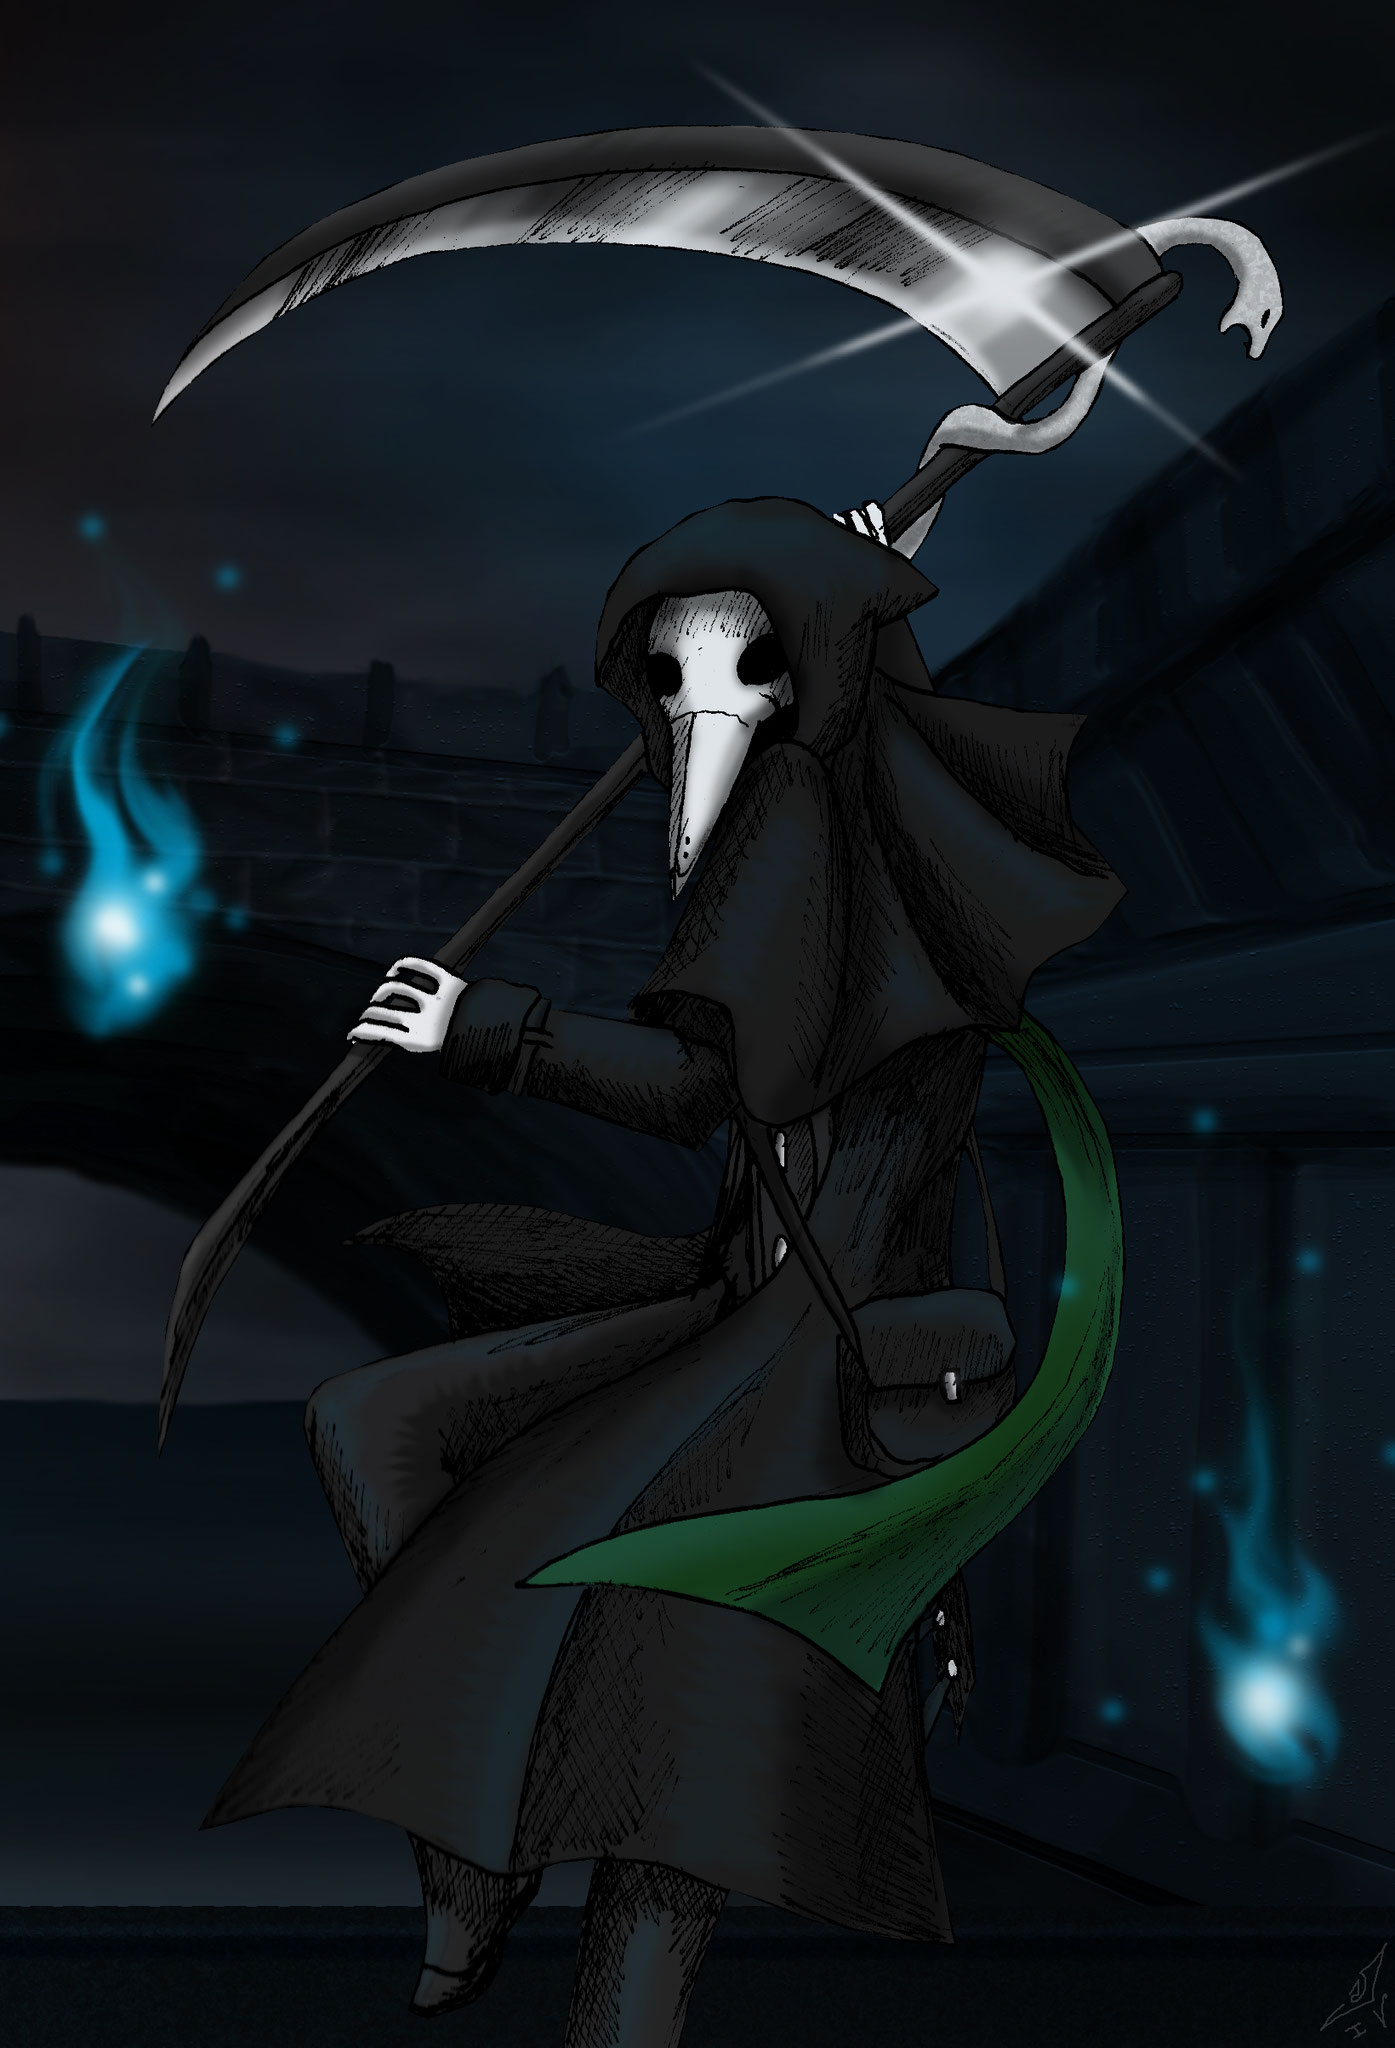 darkinboi's character